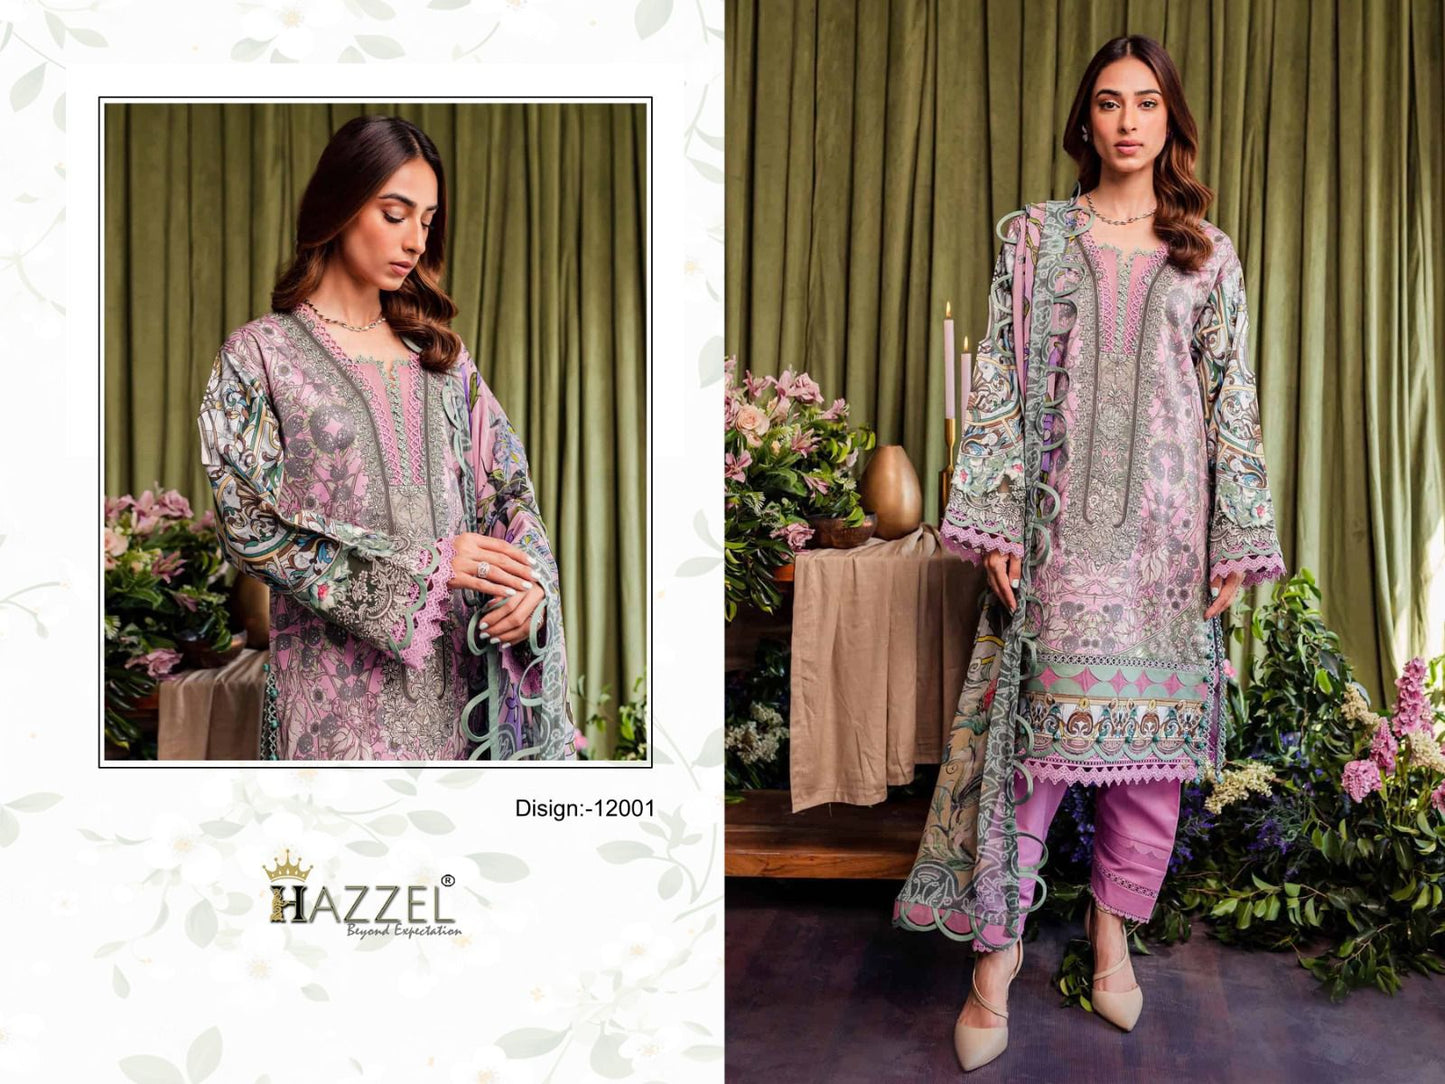 Best Of Queens Court Vol 12 Hazzel Pure Cotton Pakistani Patch Work Suits Exporter